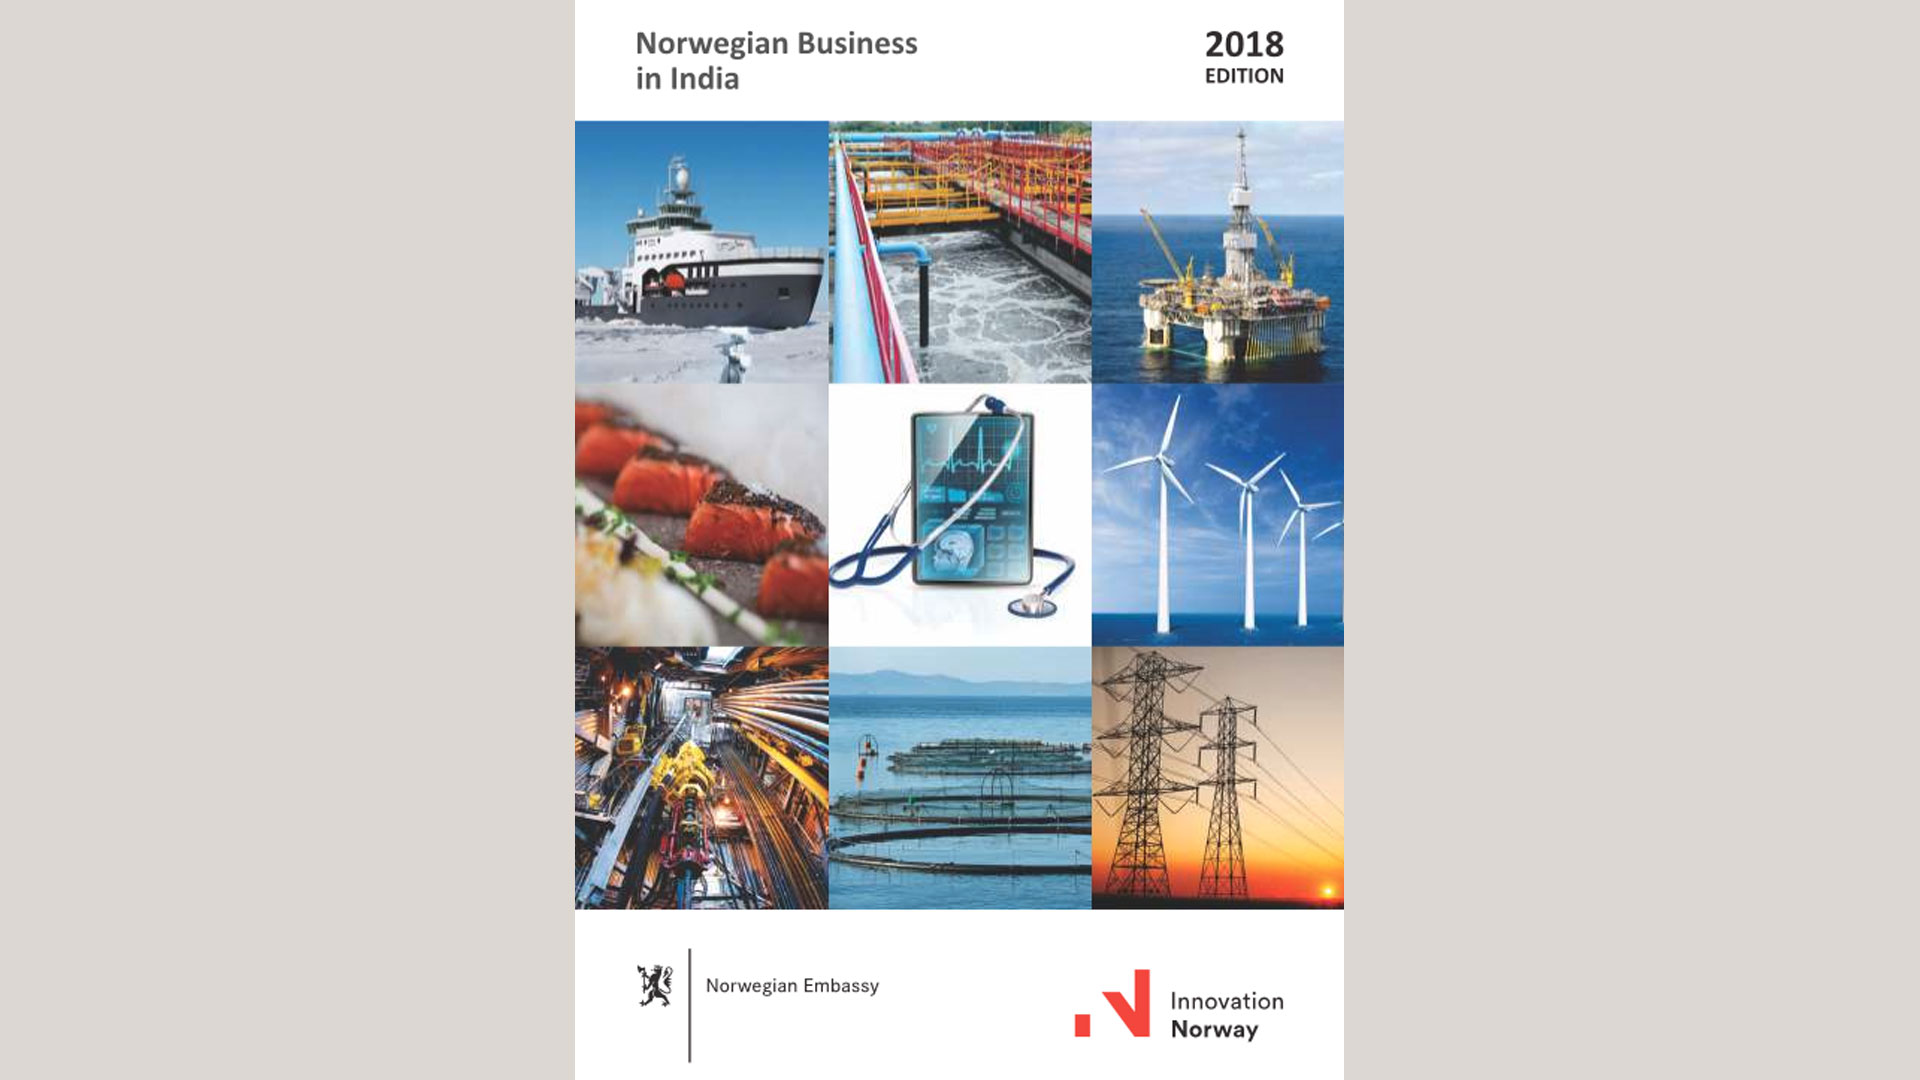 Norwegian Business in India 2018 Edition